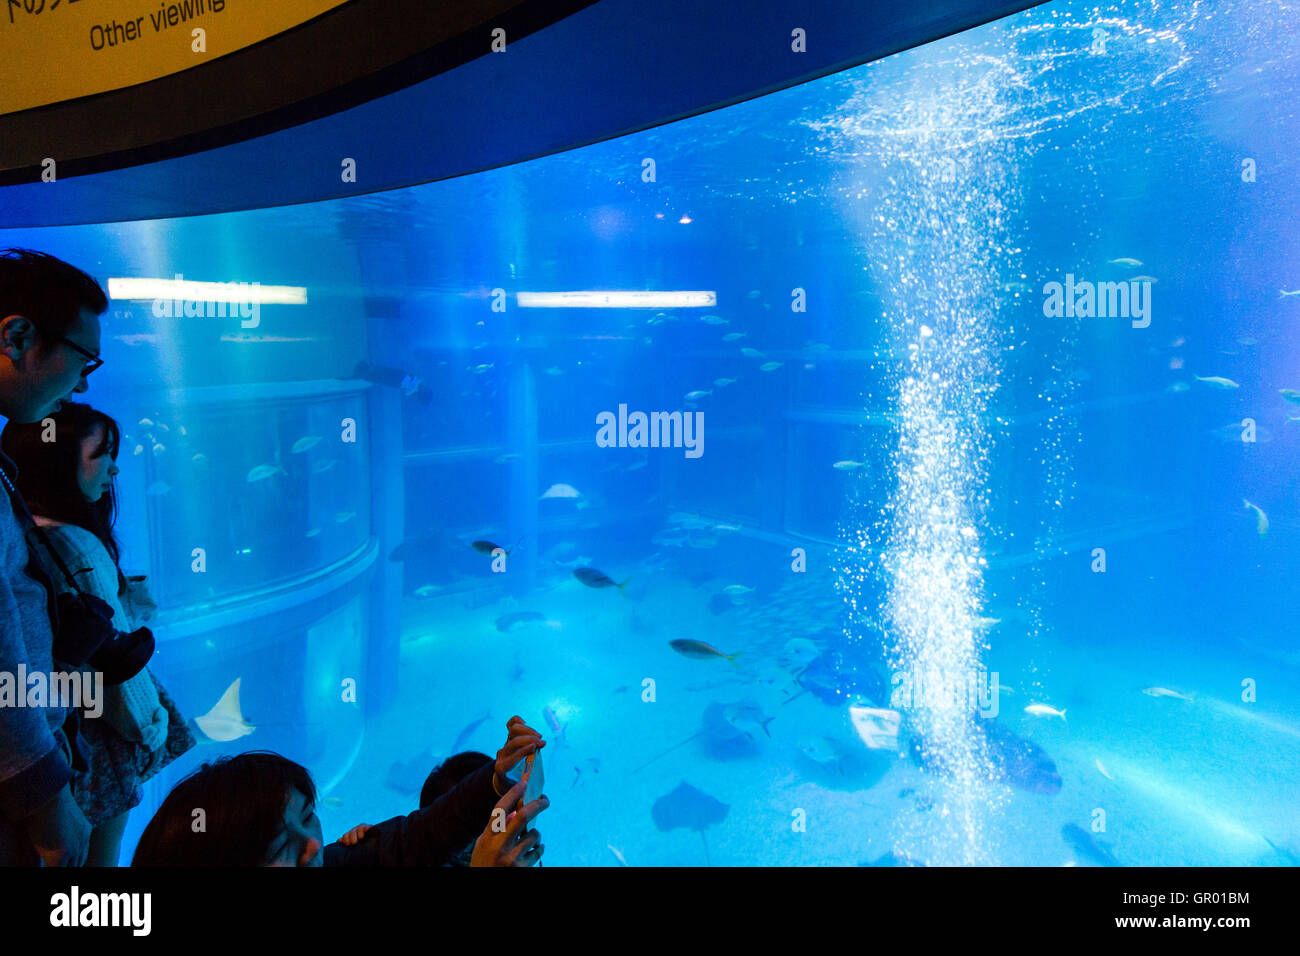 Japan, Osaka Aquarium, Kaiyukan. Interior. Japanese people looking through large curved window at fish in the massive Pacific Ocean tank. Stock Photo